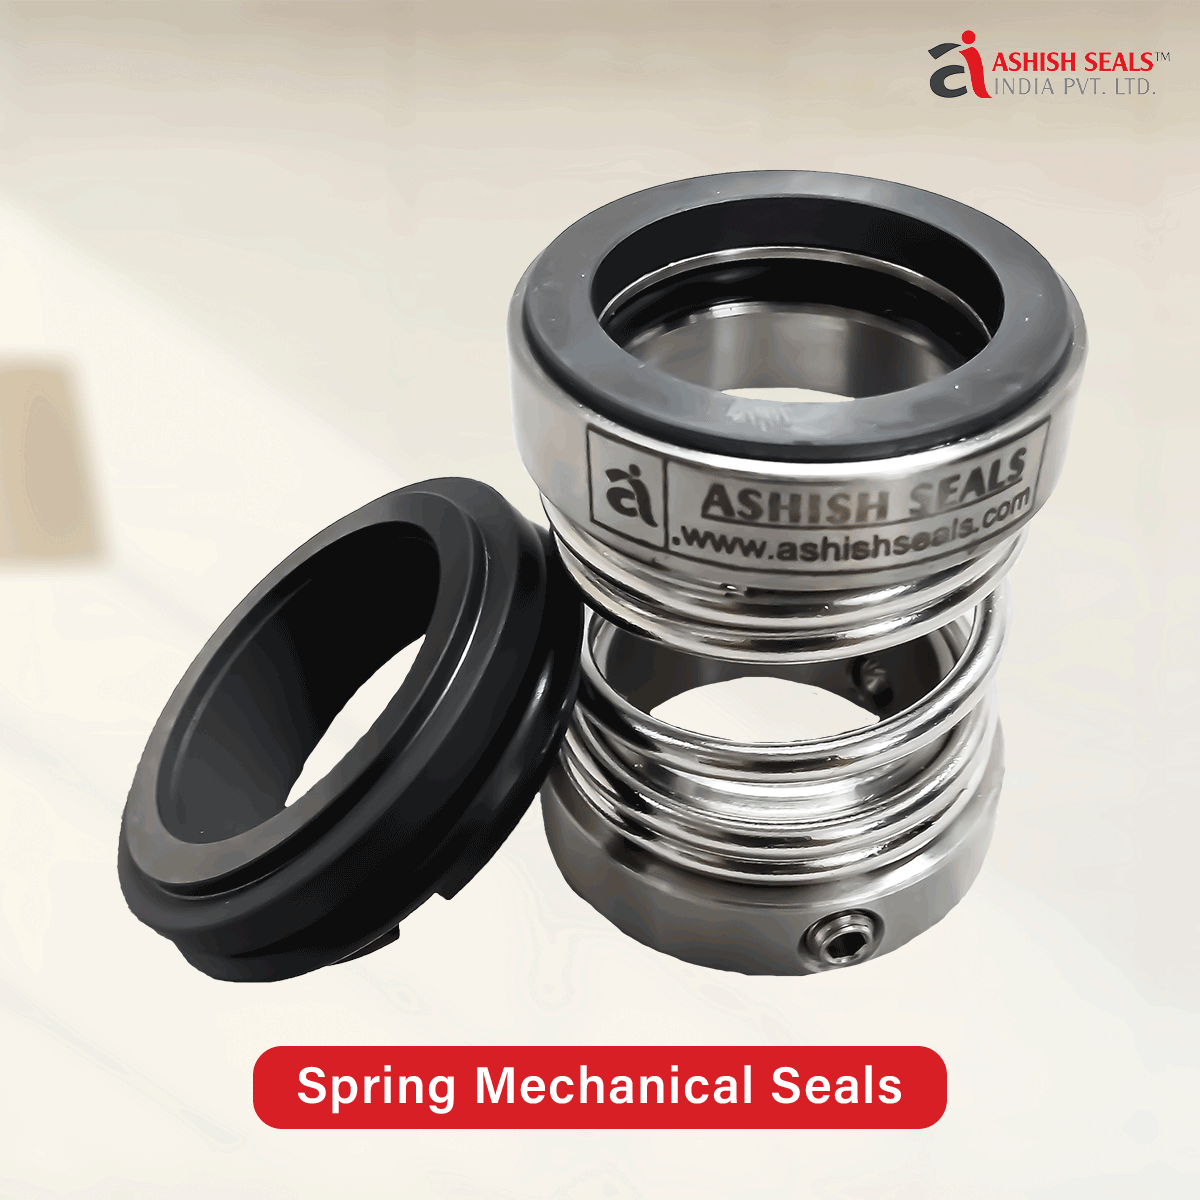 Spring Mechanical Seals